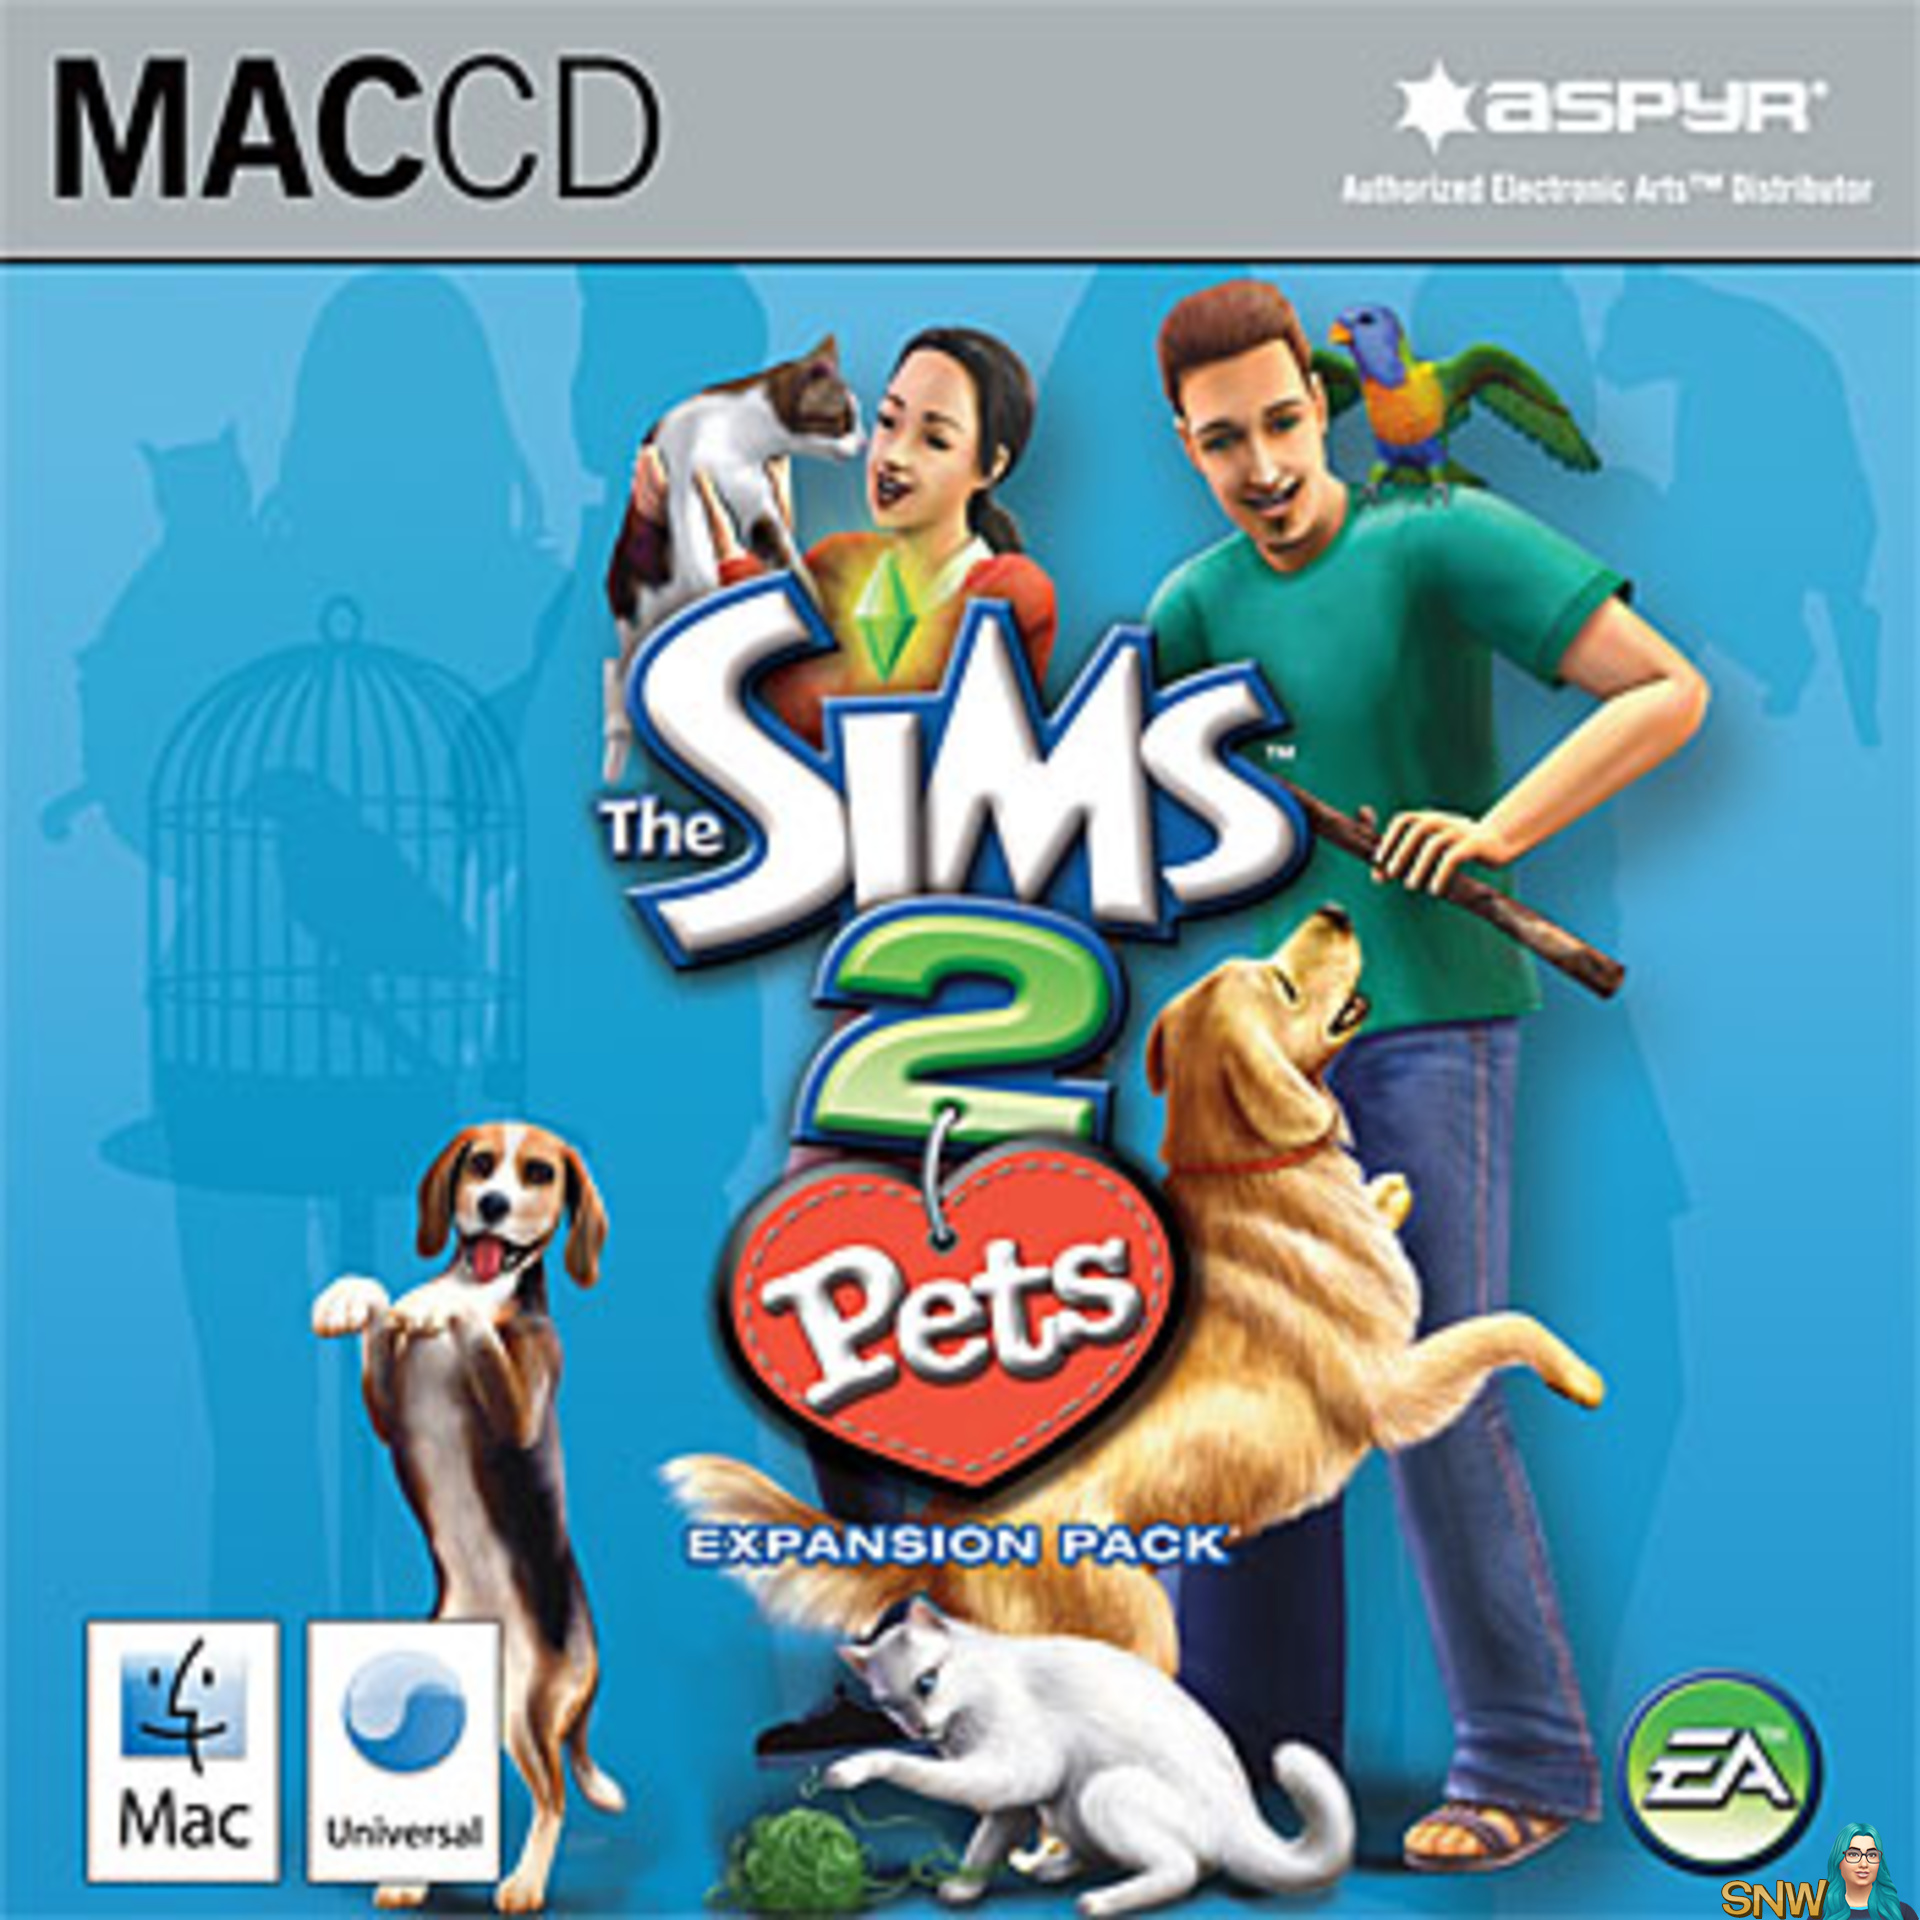 Симс 2 петс диск. The SIMS 2: Pets (для игровых приставок). The SIMS 2 питомцы диск DVD. The SIMS 2: питомцы.